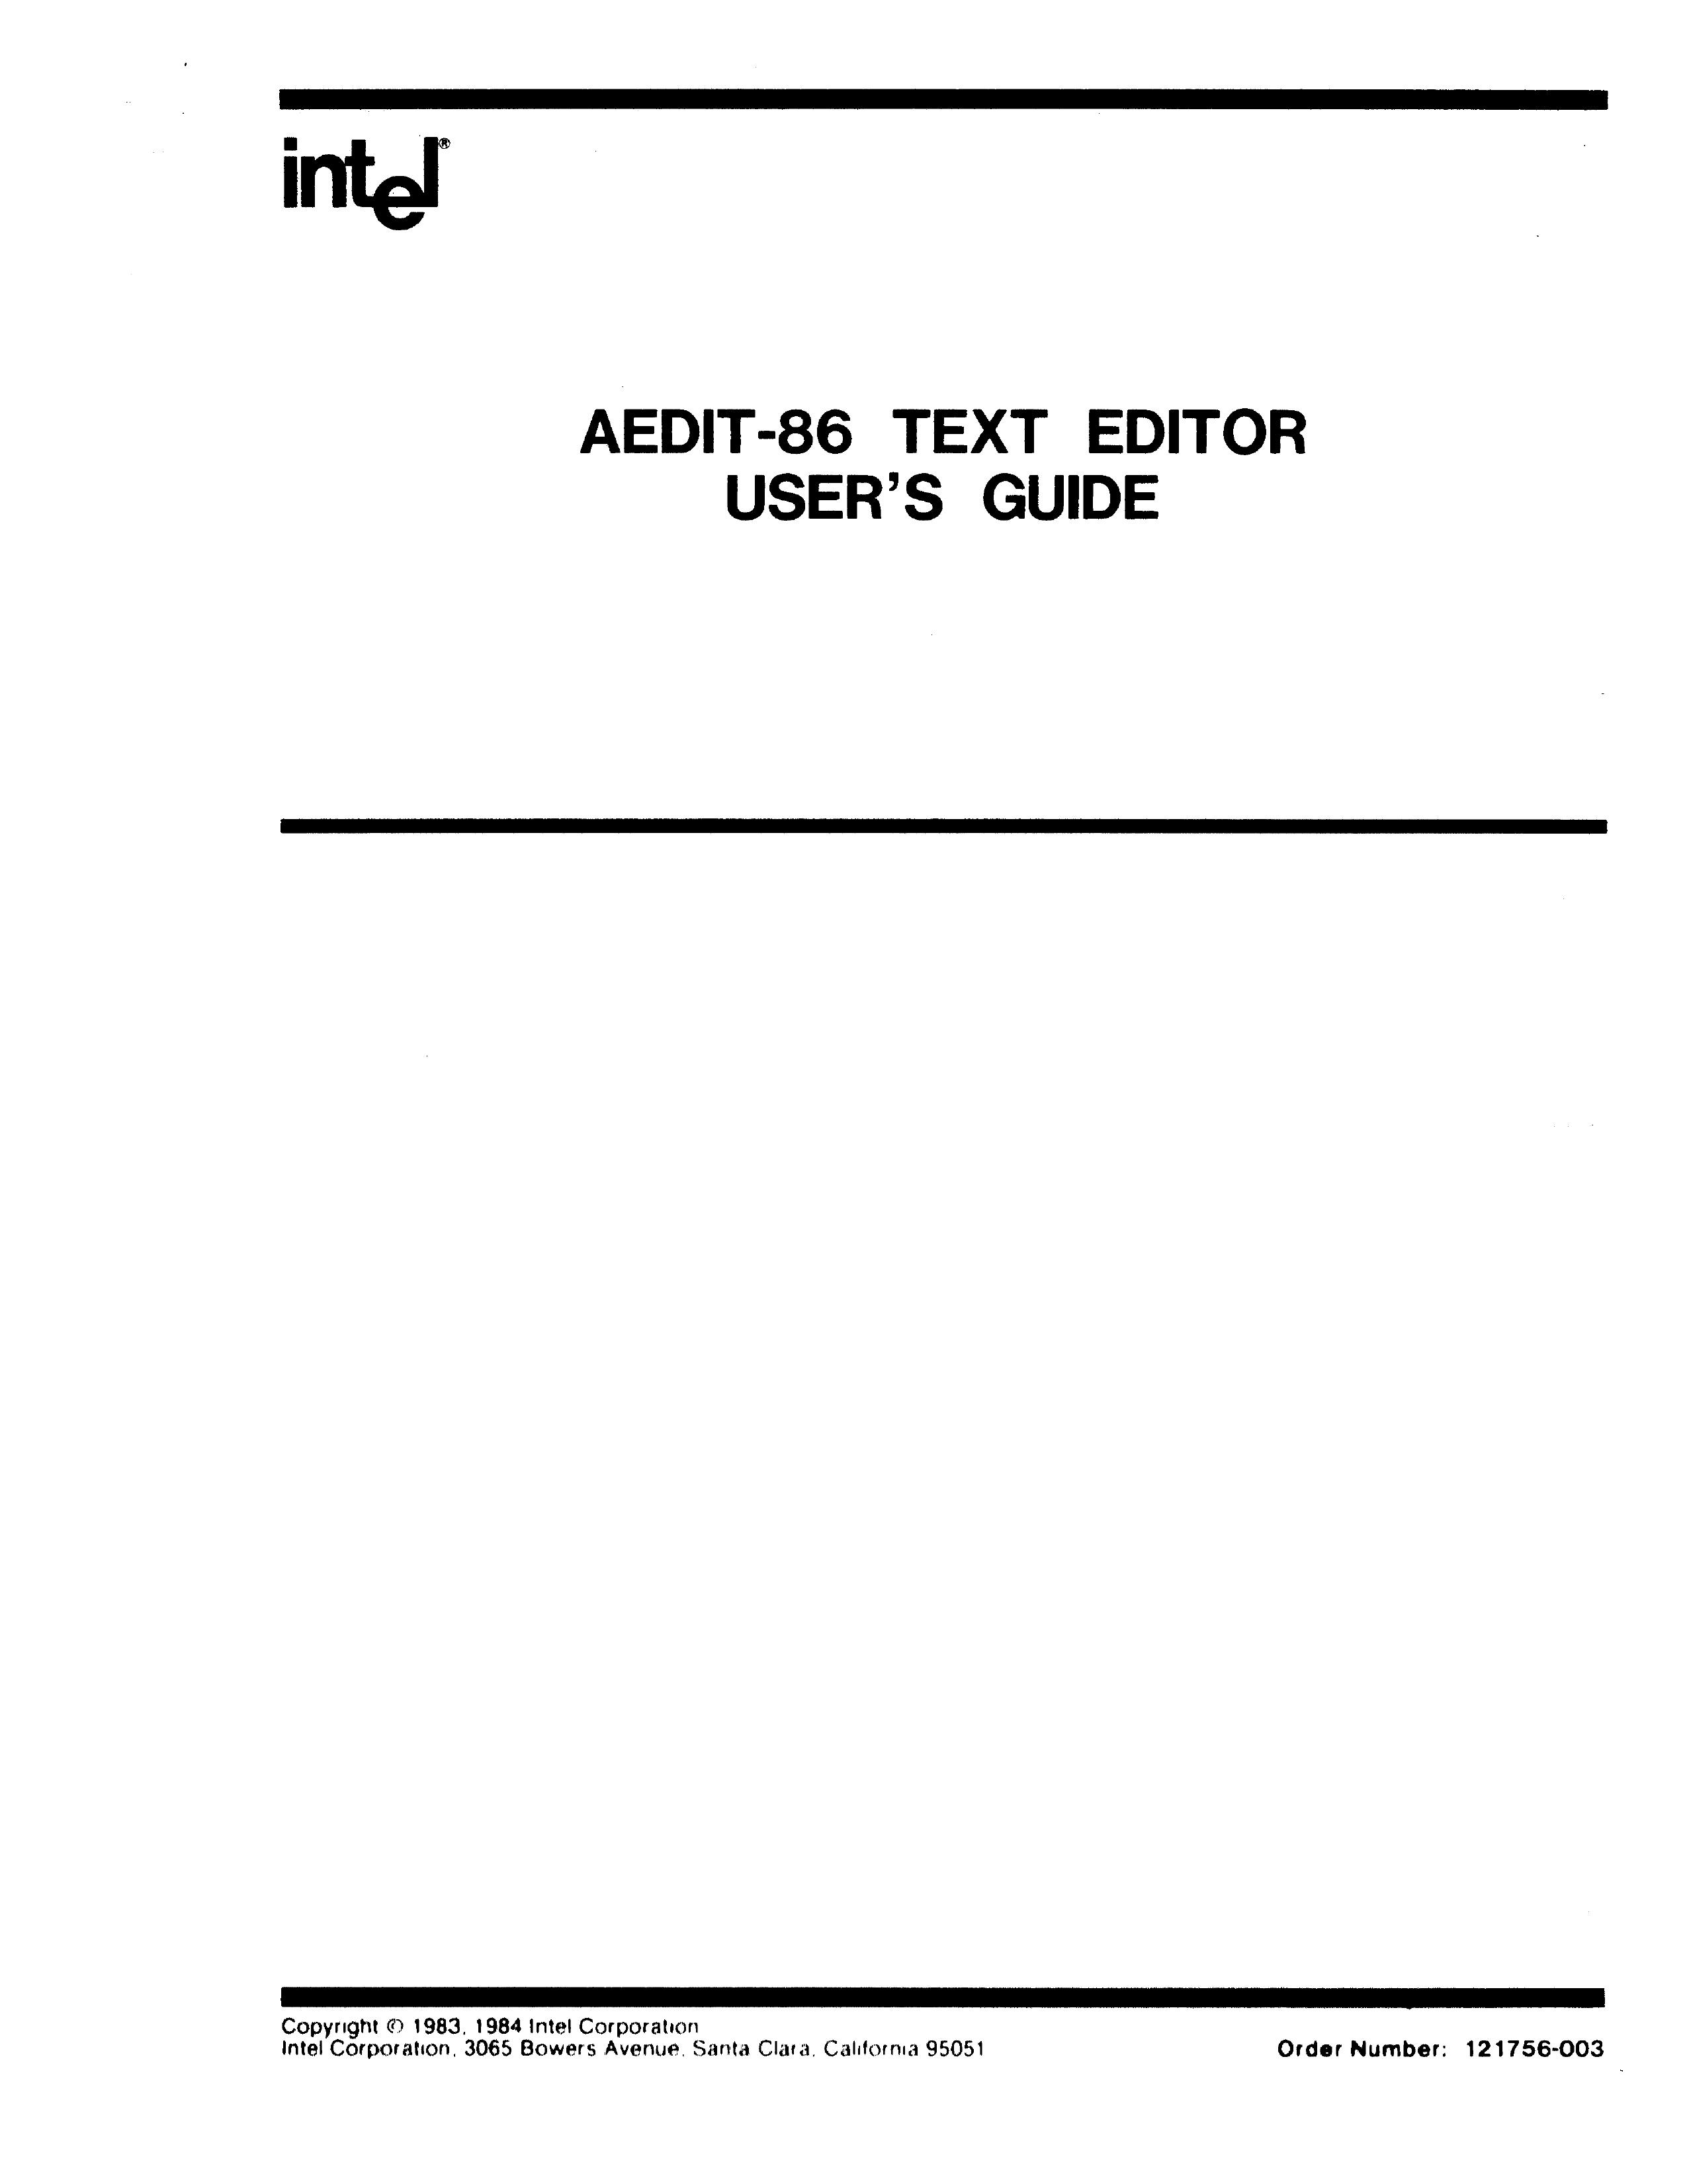 Intel AEDIT-86 Life Jacket User Manual